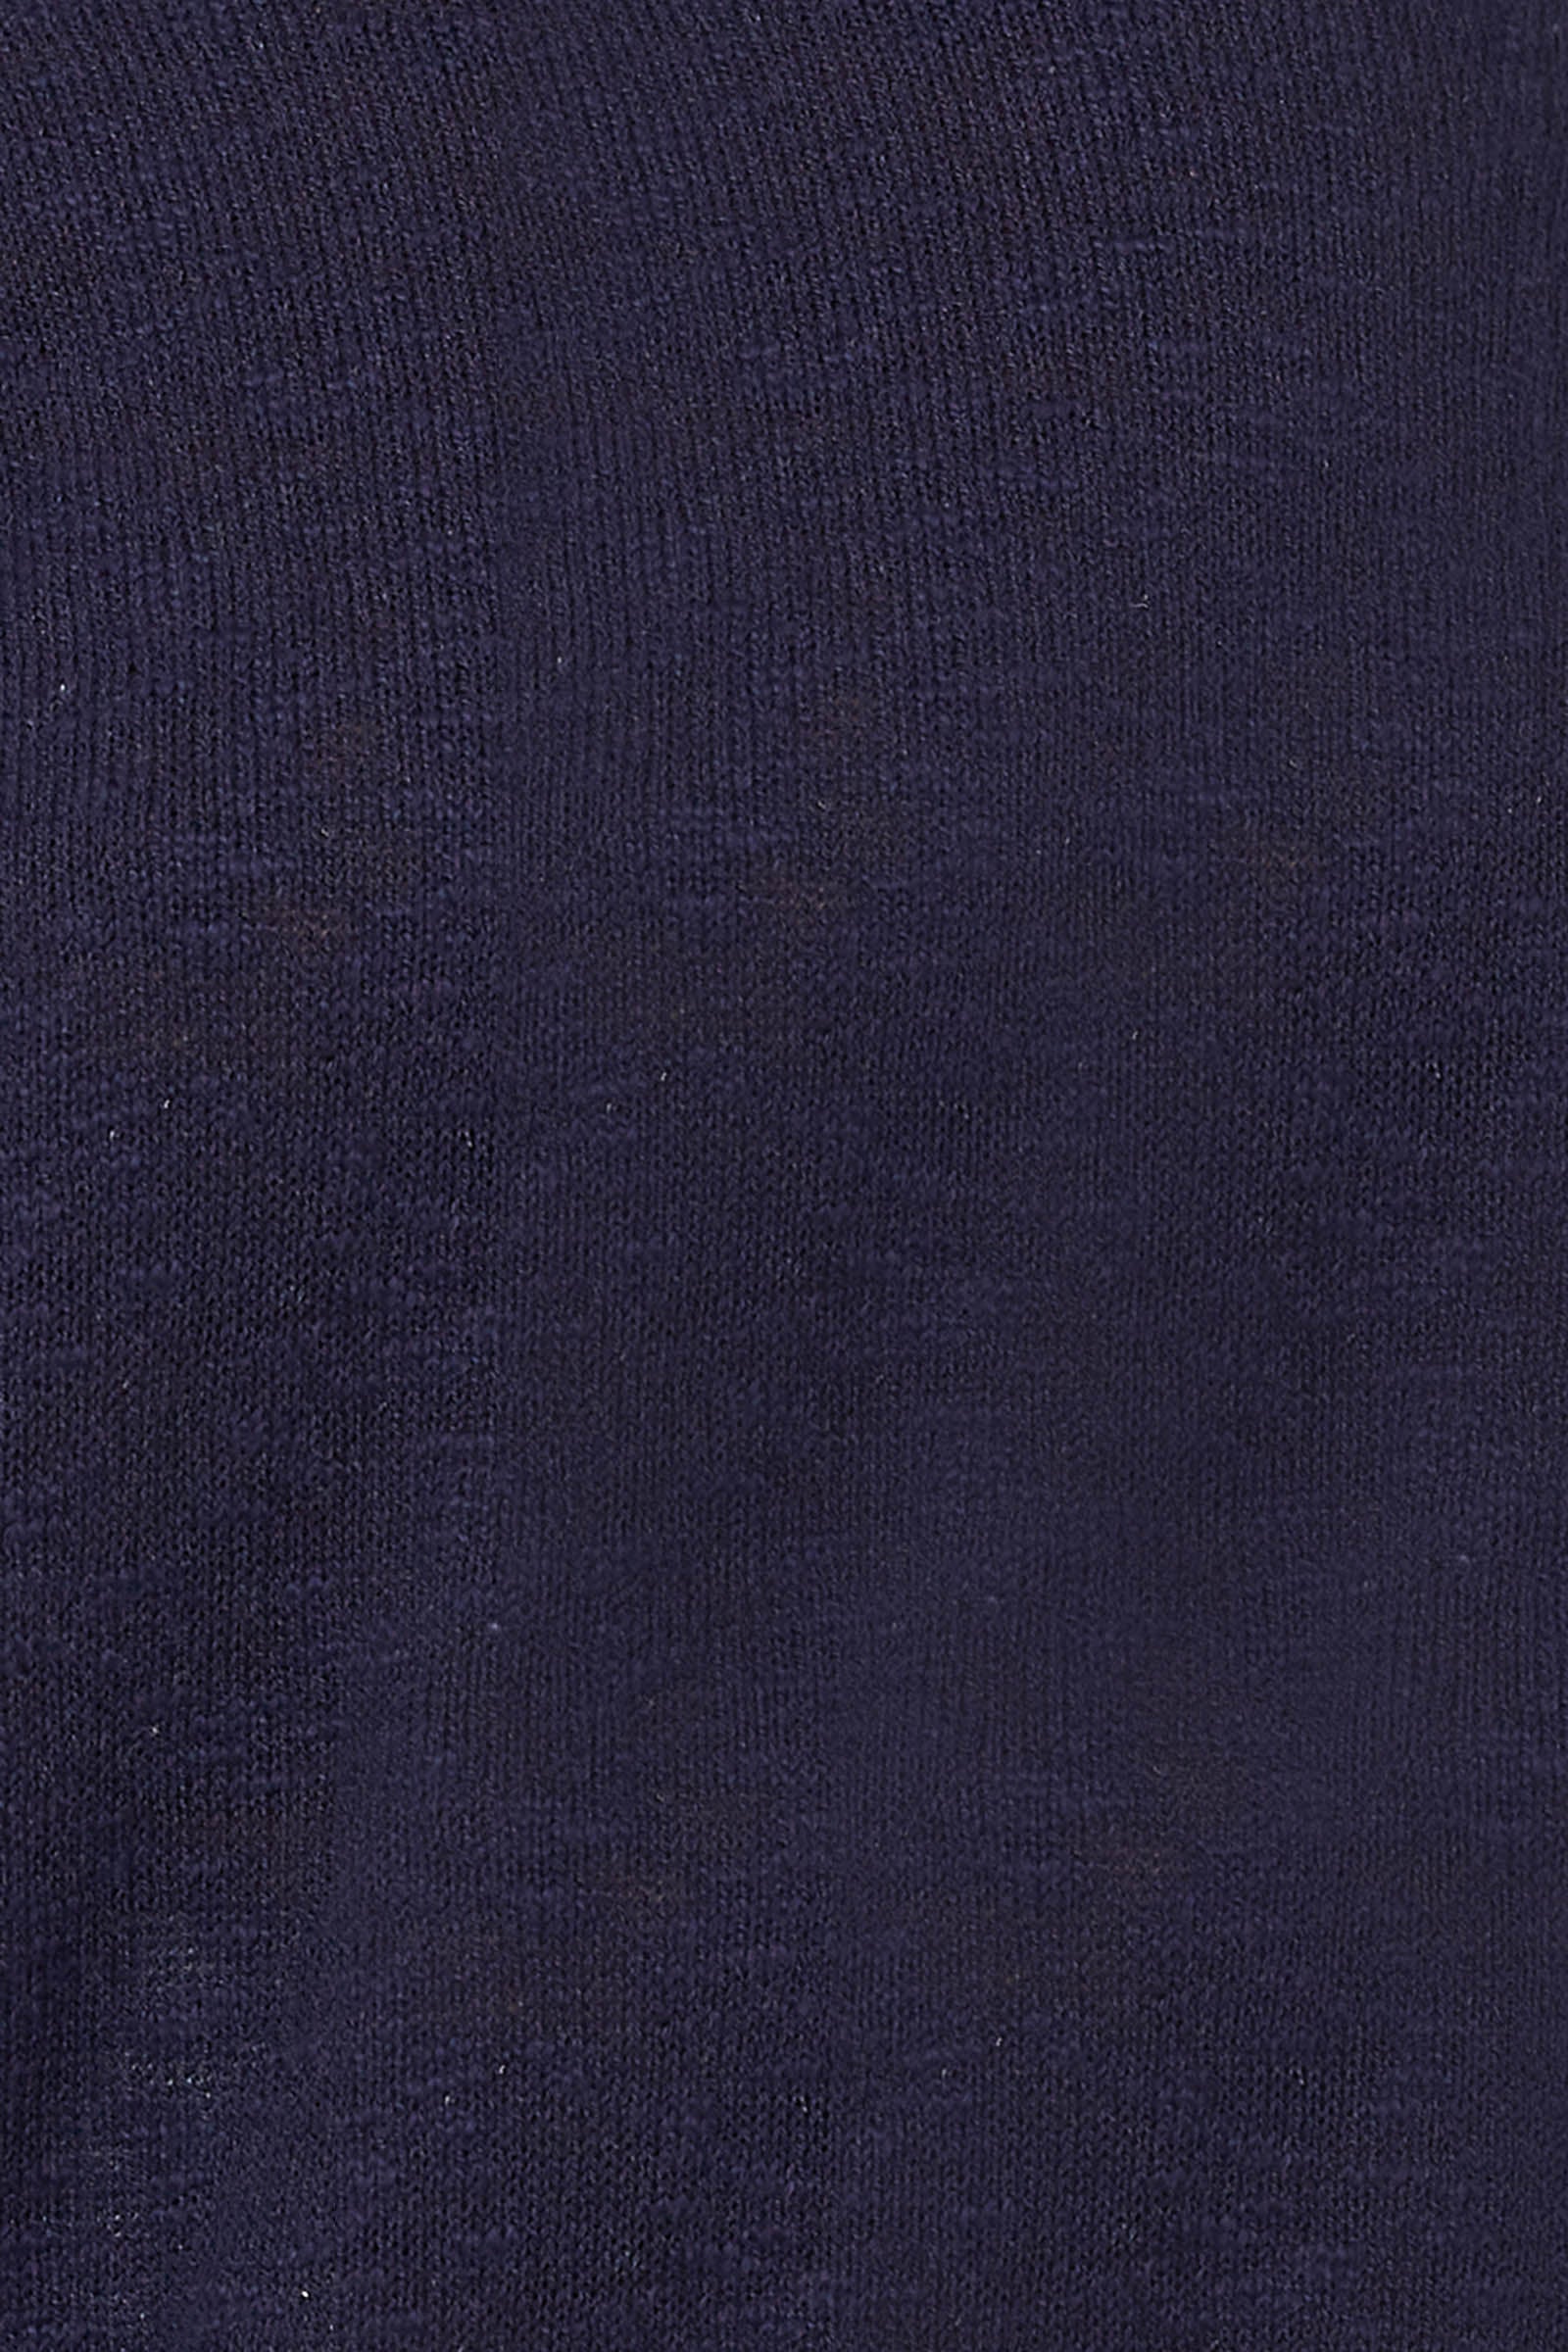 Jovial Cardigan - Sapphire - eb&ive Clothing - Knit Cardigan Long